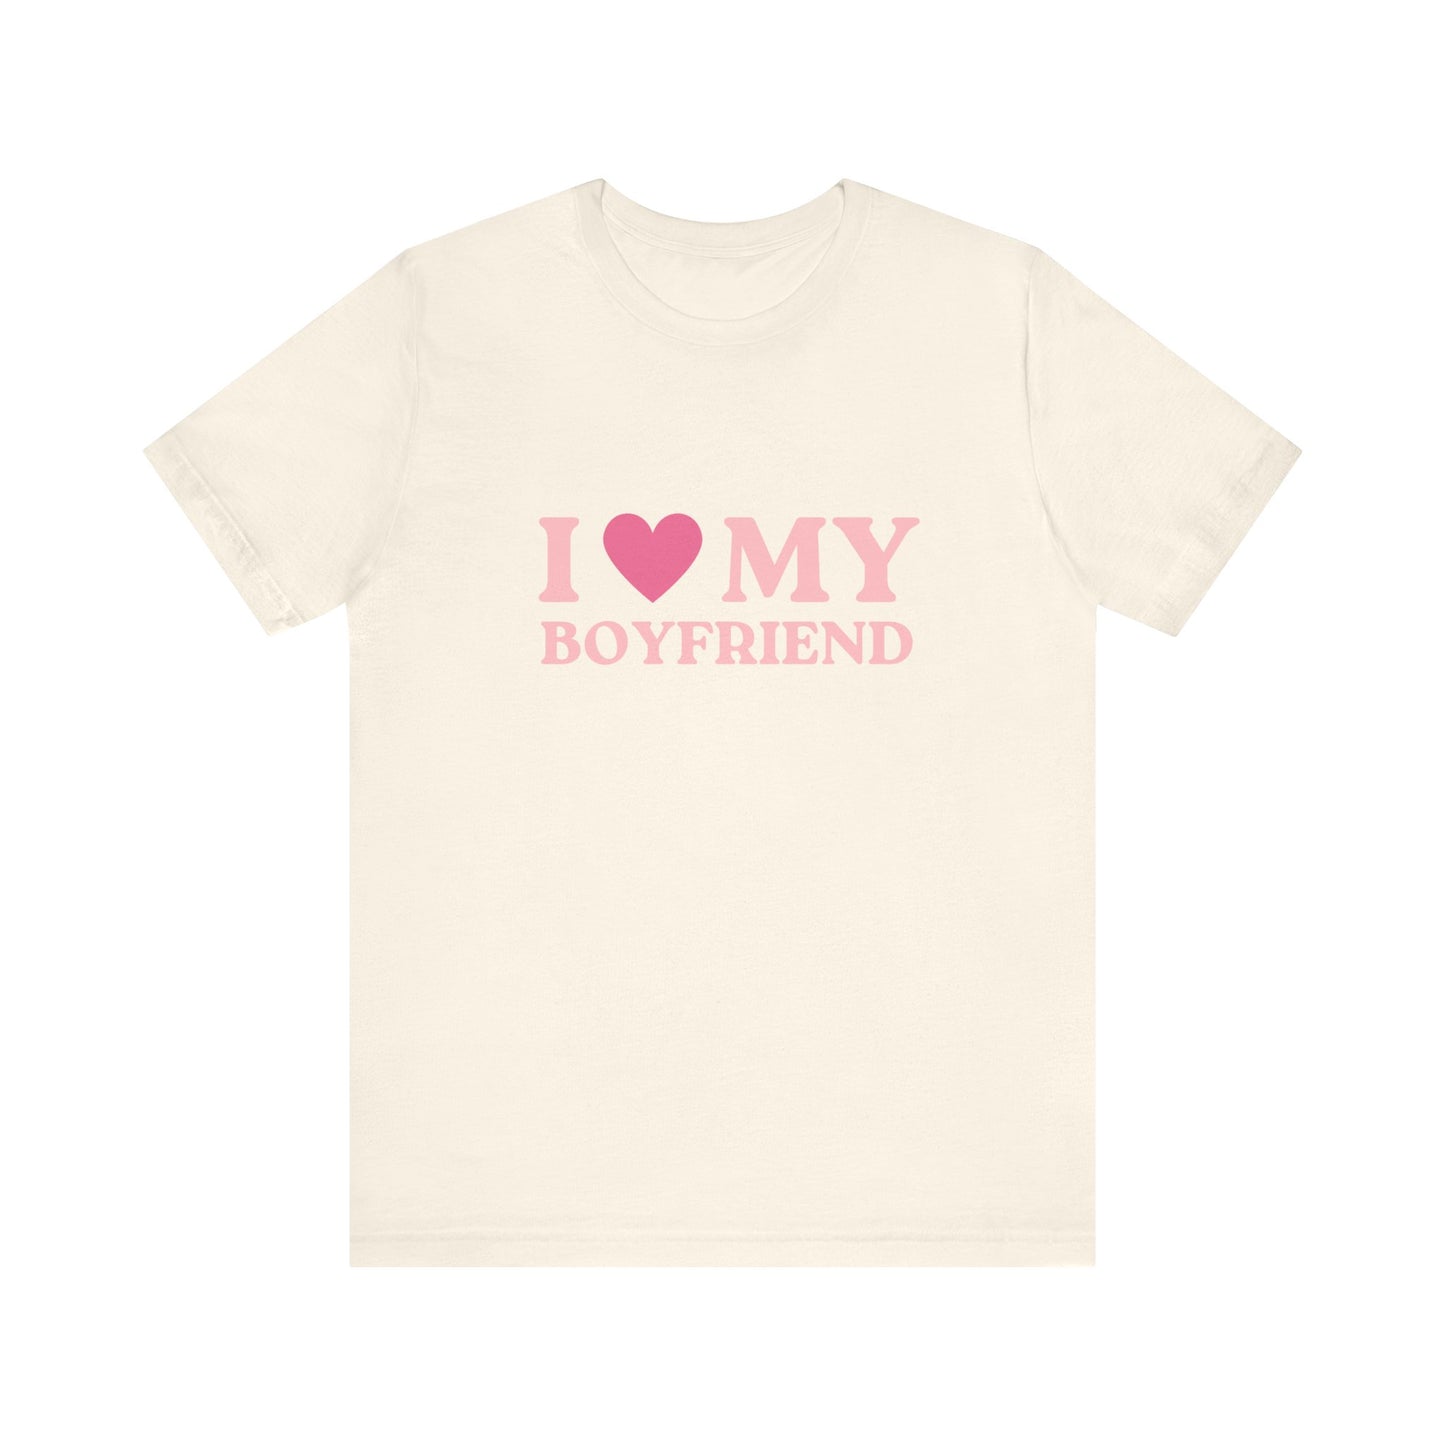 I Love My Boyfriend Unisex T-Shirt - I Heart My BF Tee